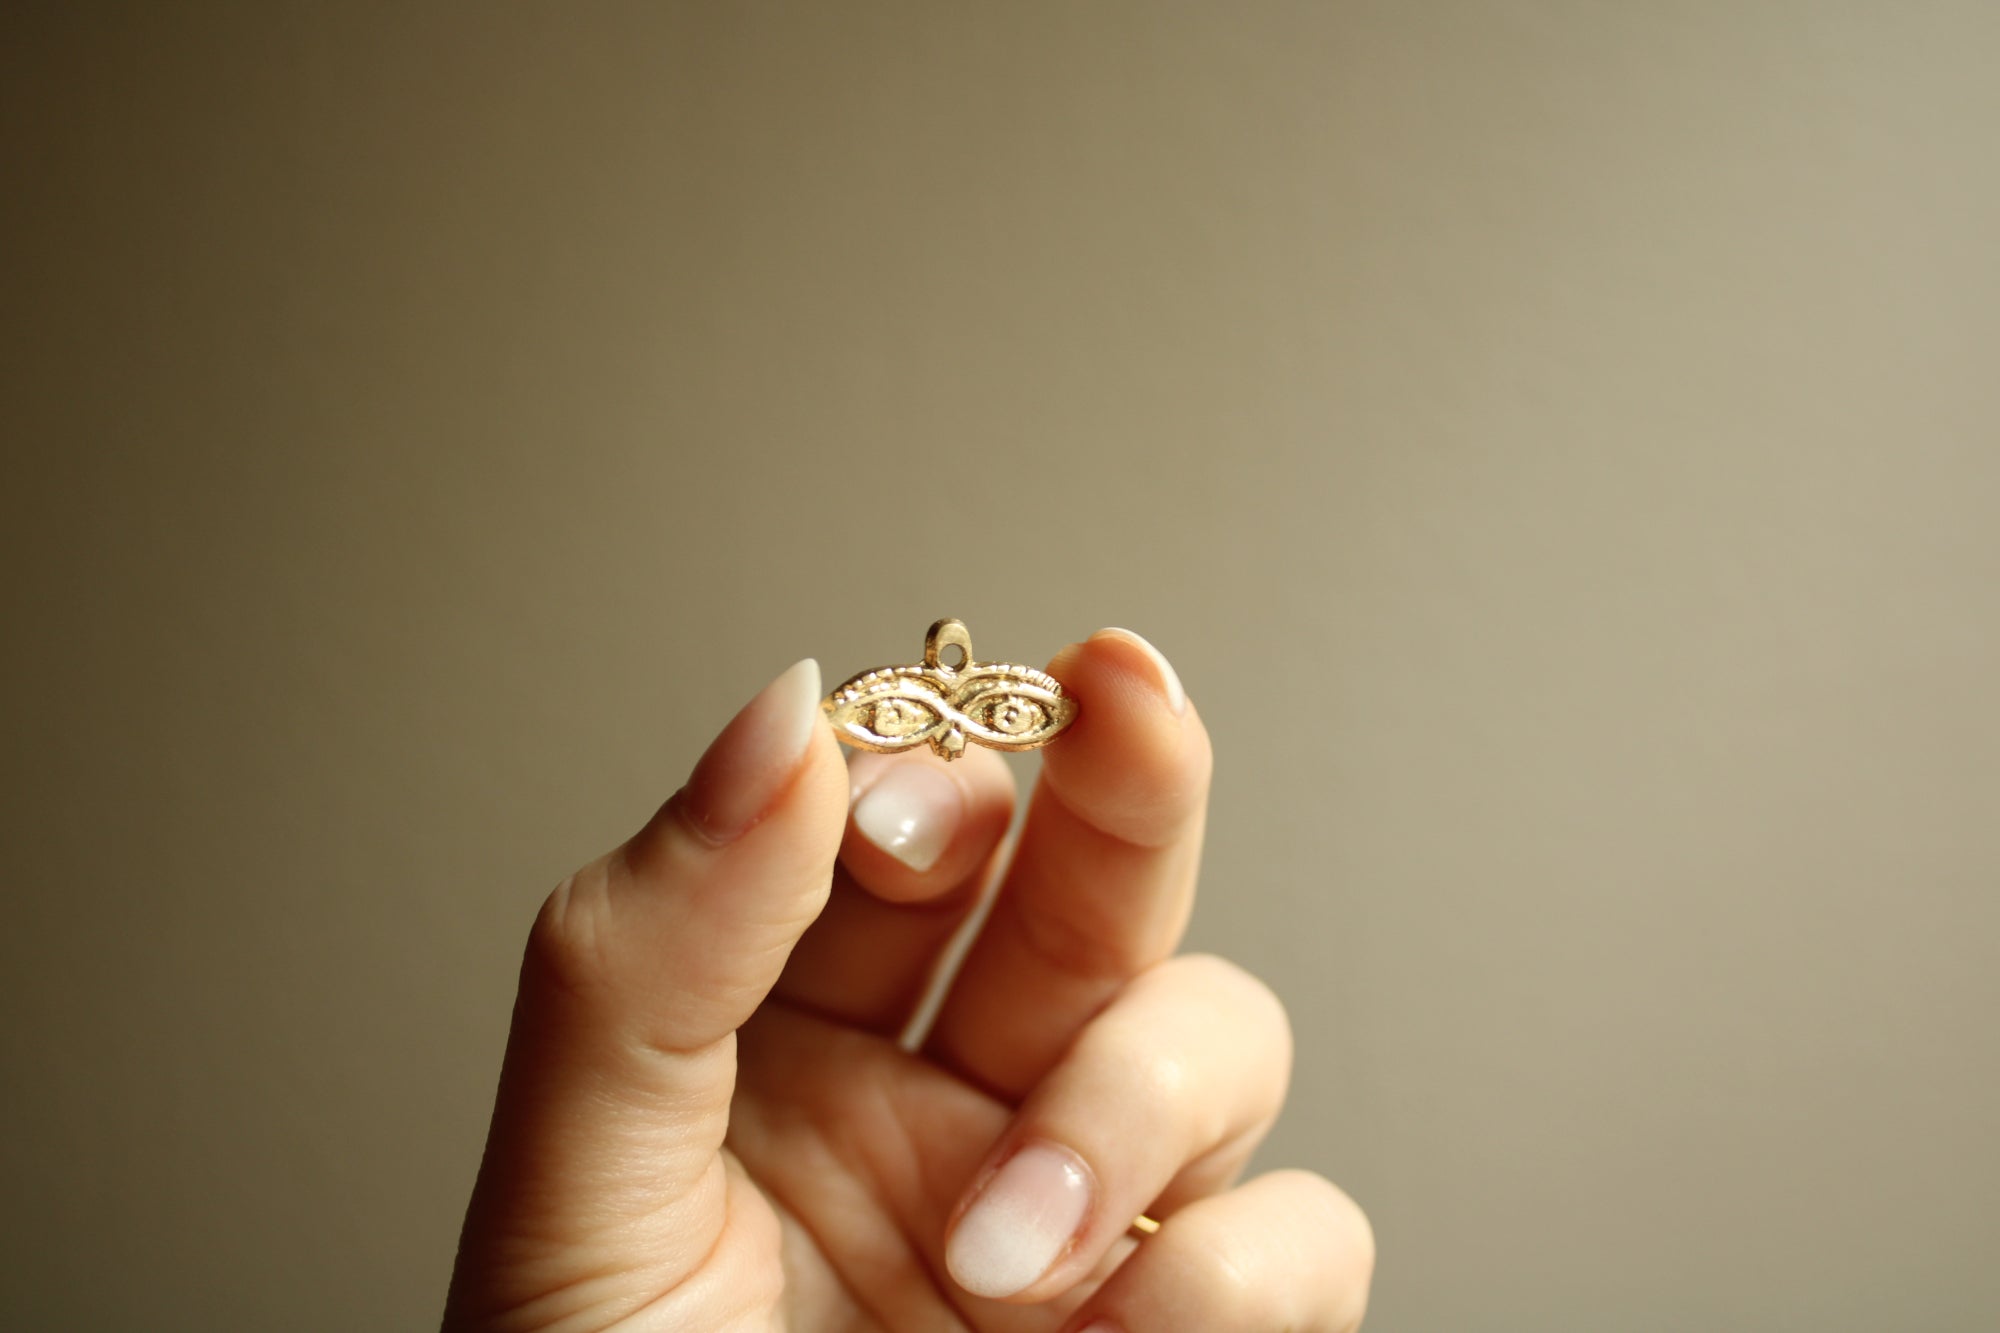 Solid Gold Third Eye Charm Amulet dunia simunovic jewelry